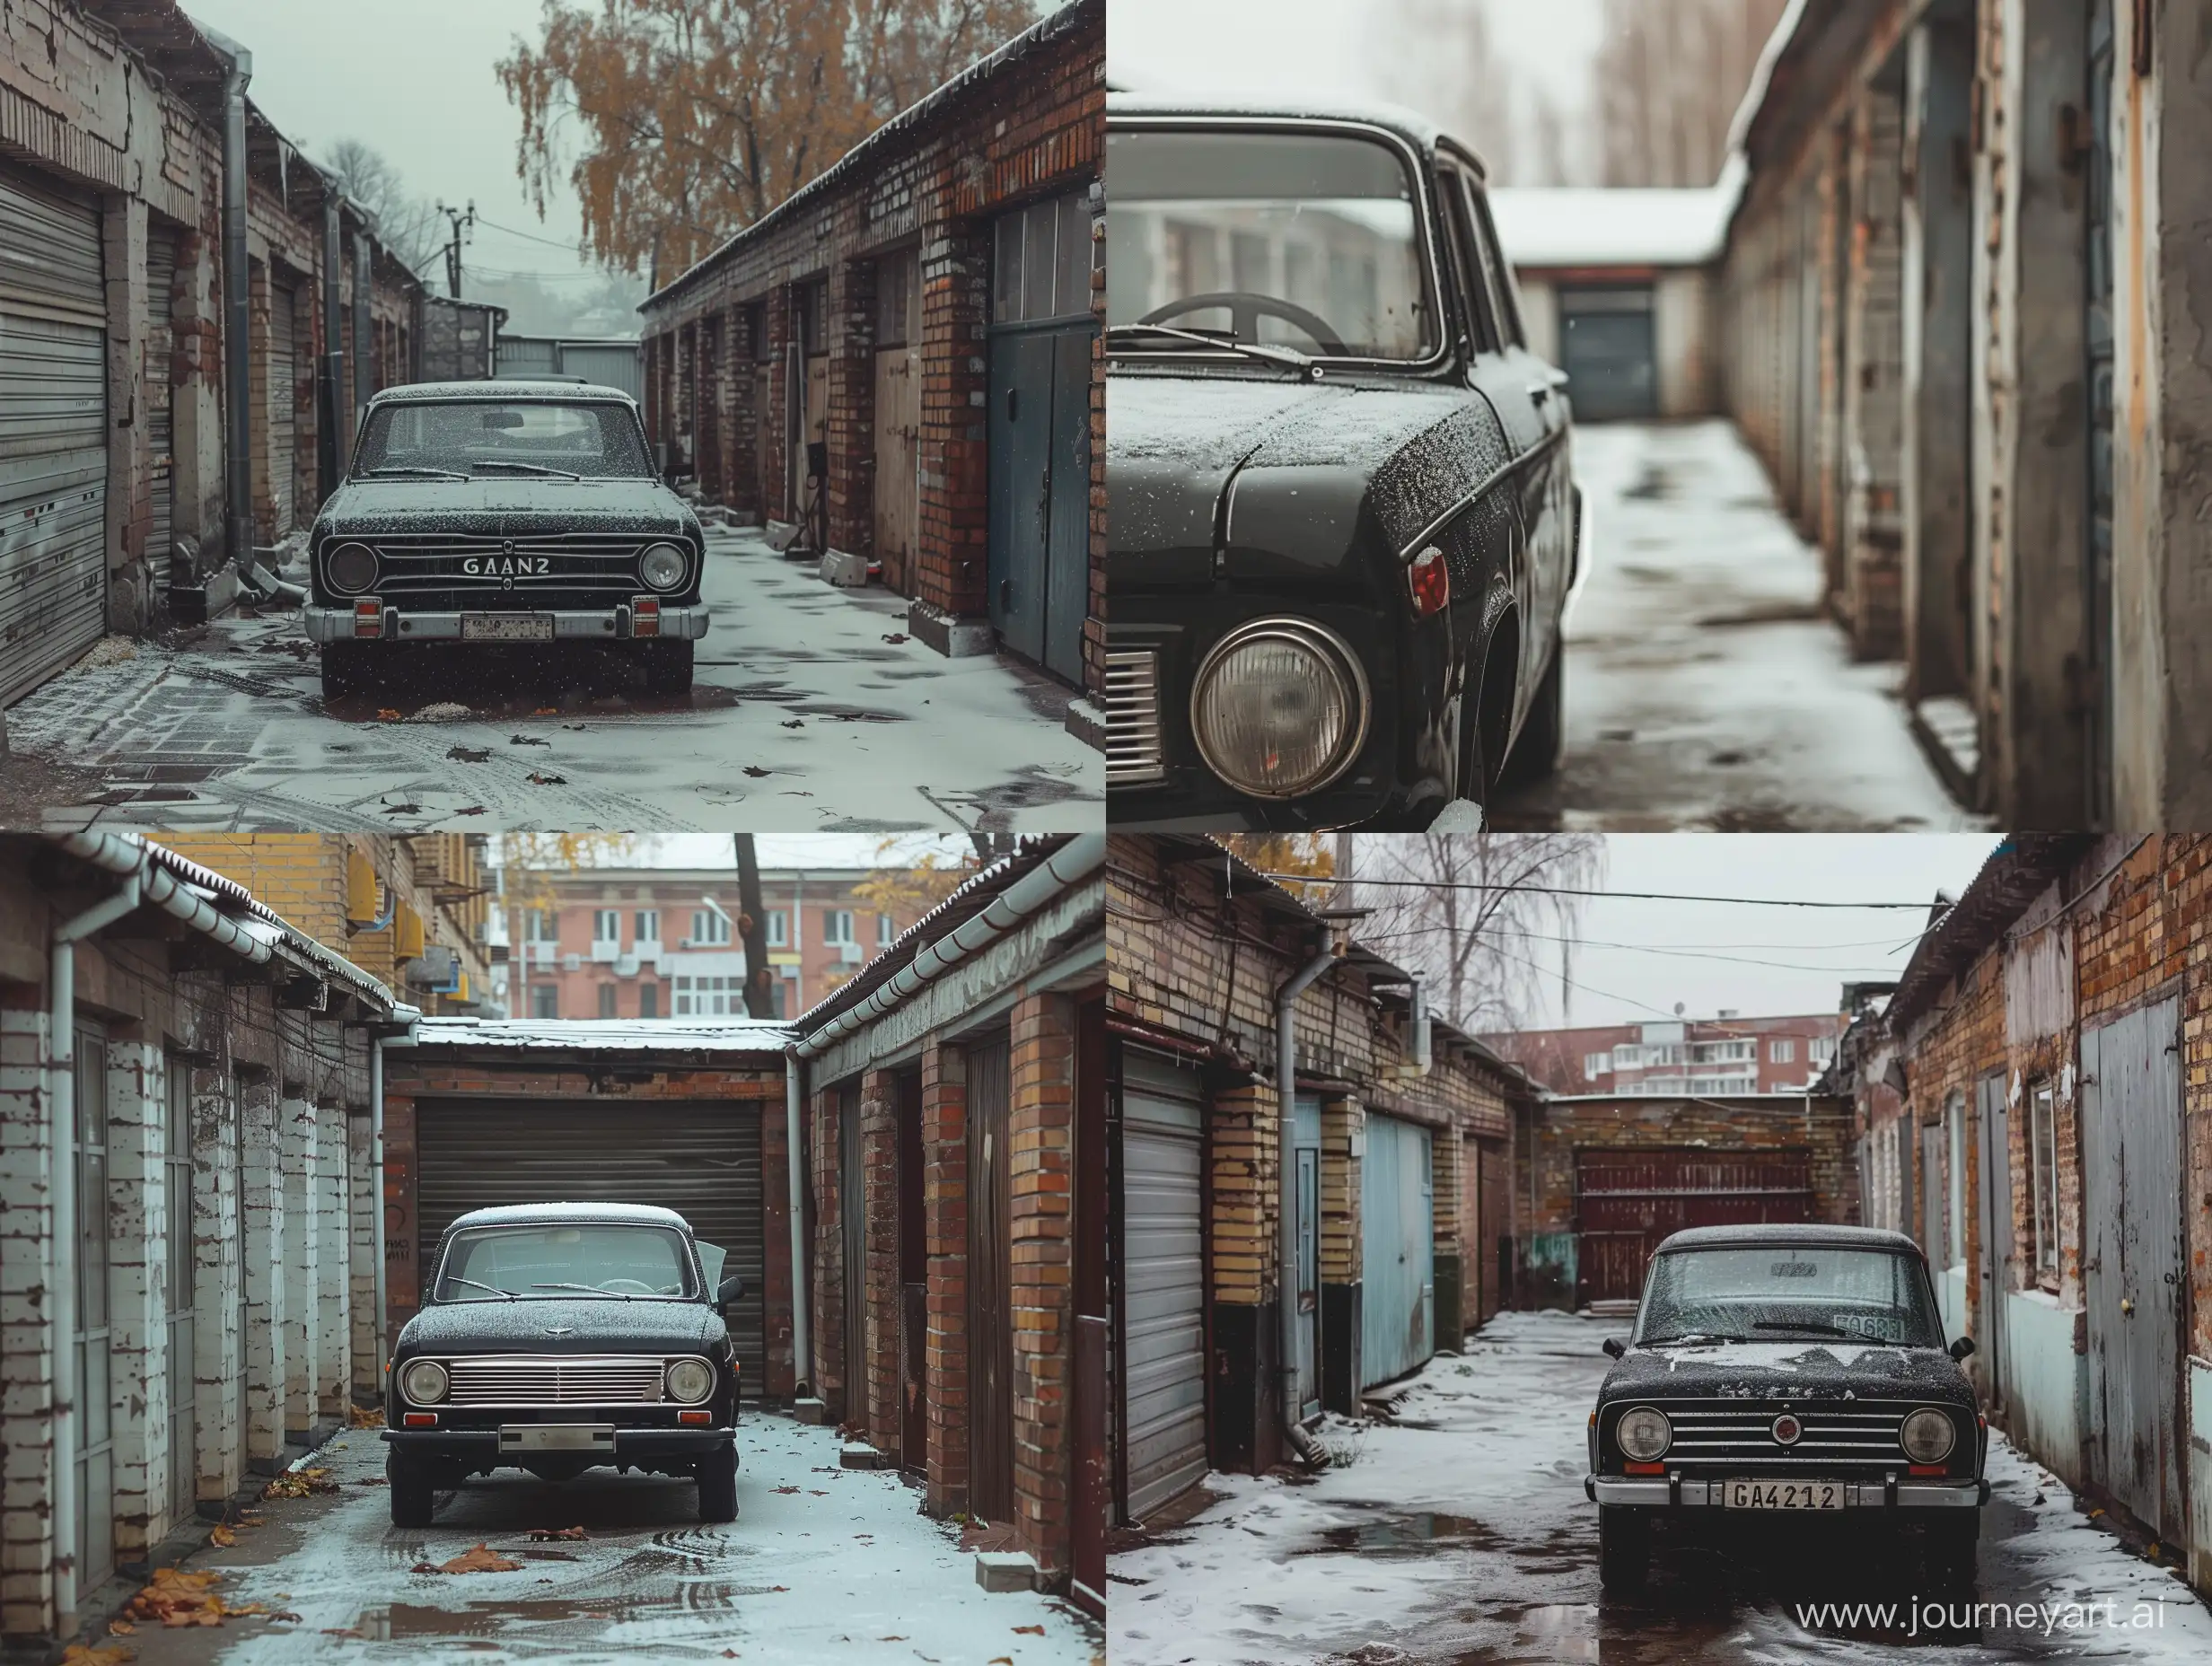 Late-Autumn-Scene-Russian-Town-Garage-Cooperative-with-GAZ21-Car